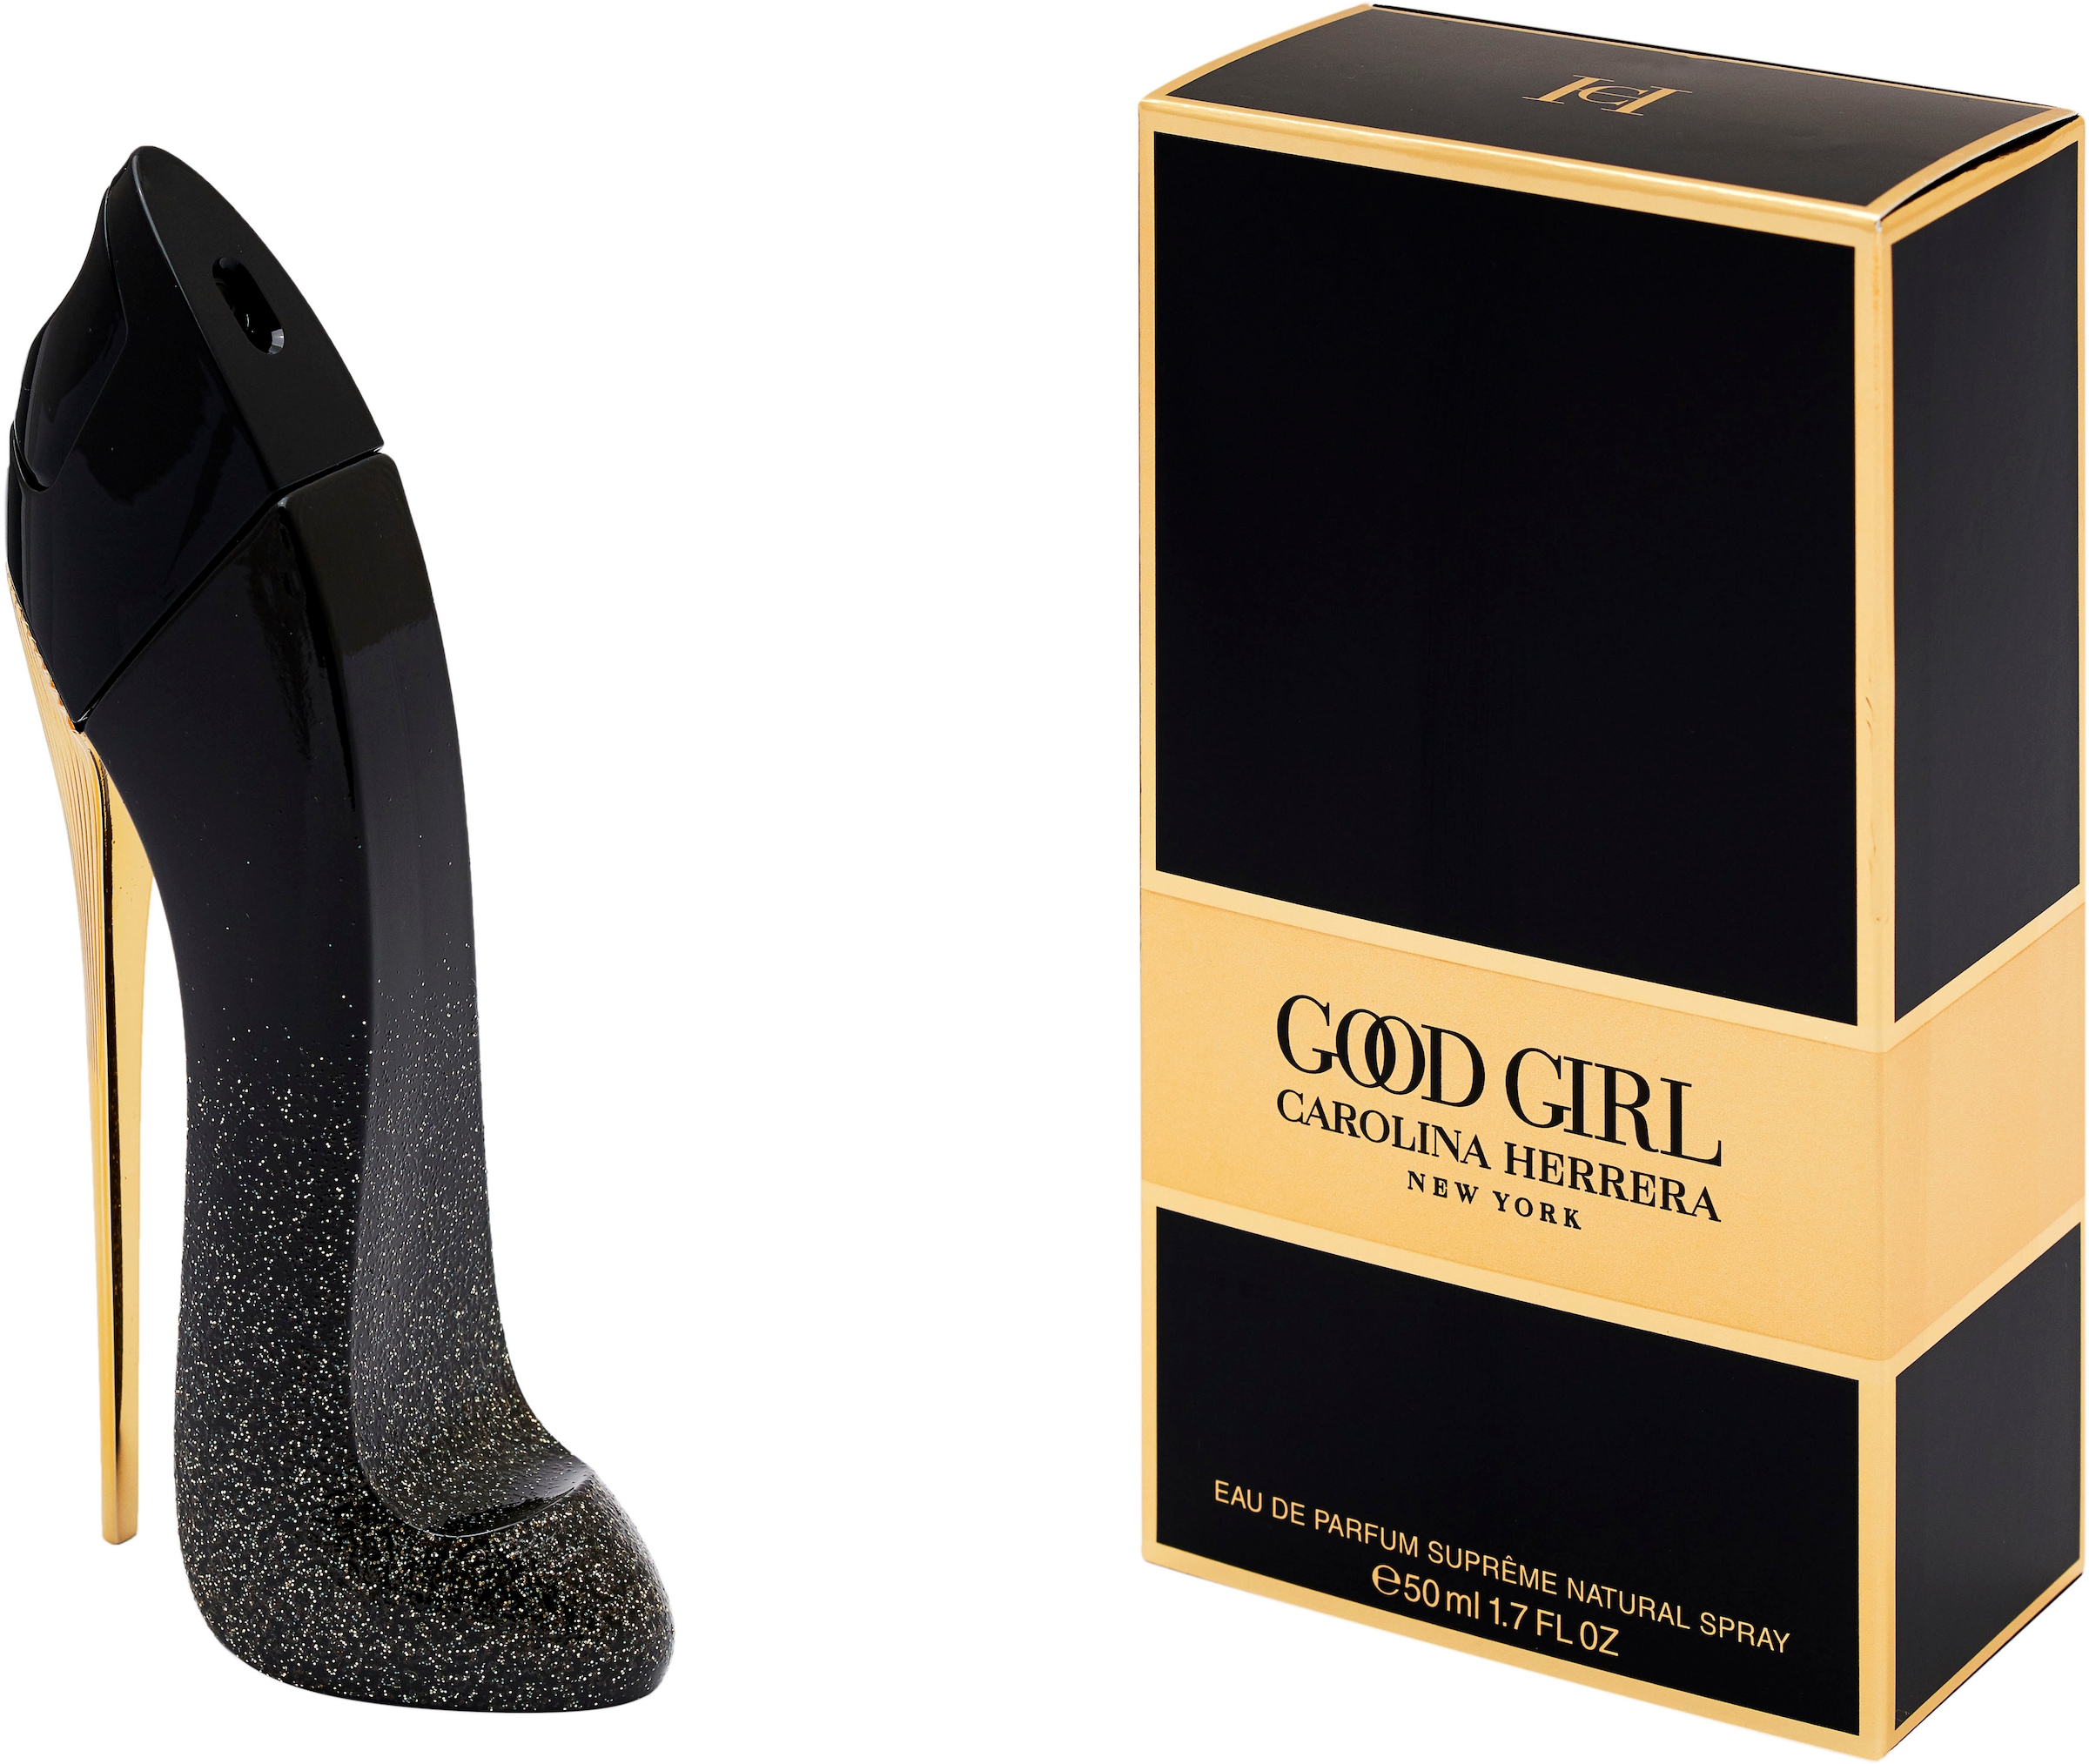 Carolina Herrera Eau de Parfum »Good Girl Supreme« bequem kaufen